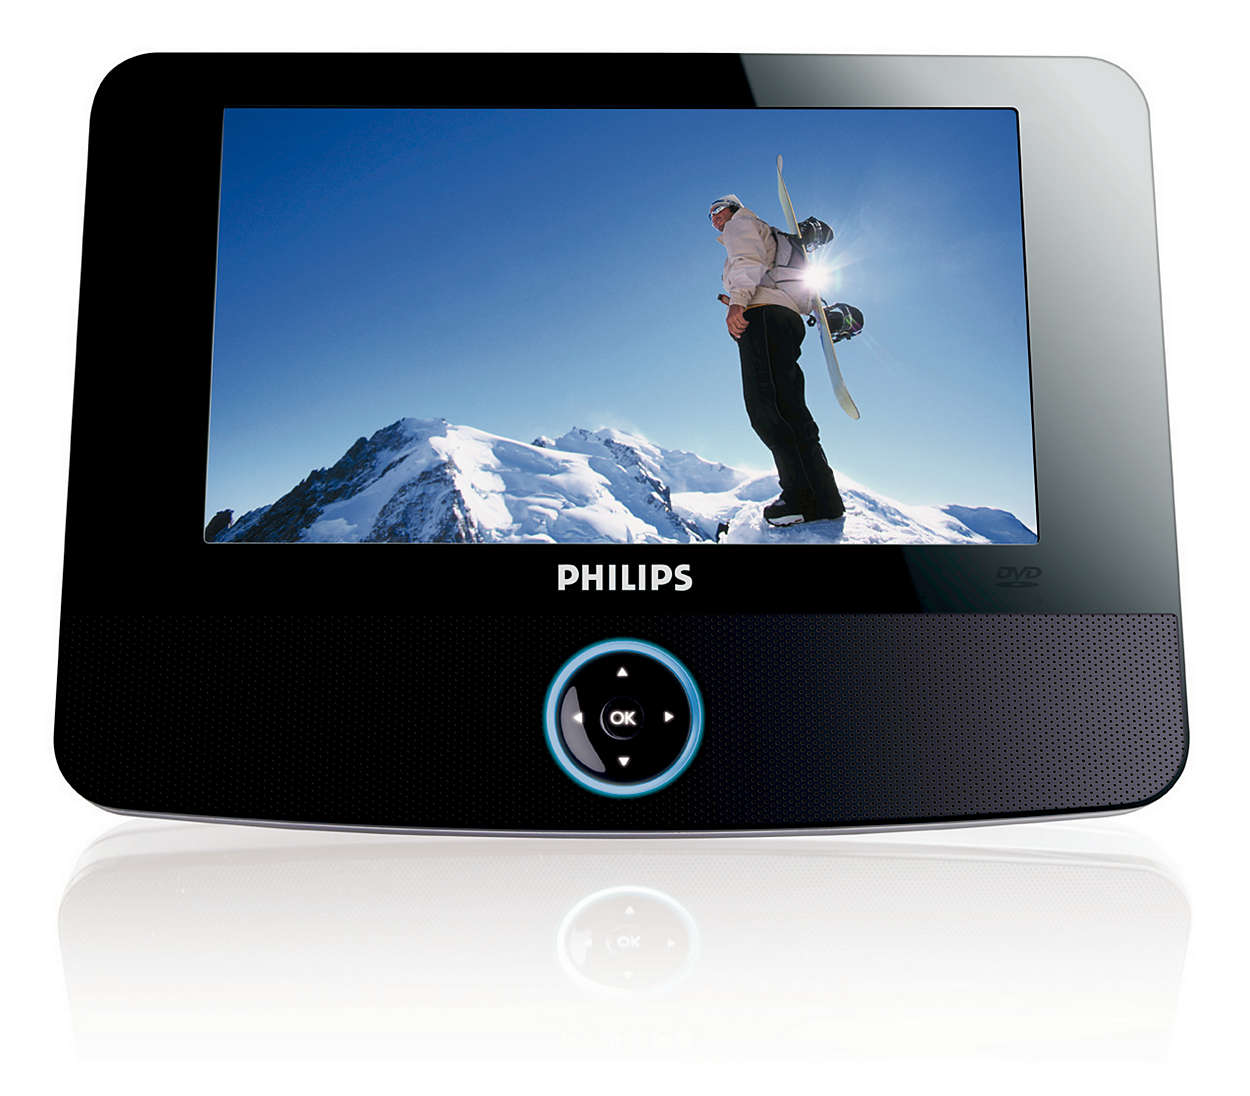 Dakloos Voorkeur eetpatroon Portable DVD Player PET723/37 | Philips